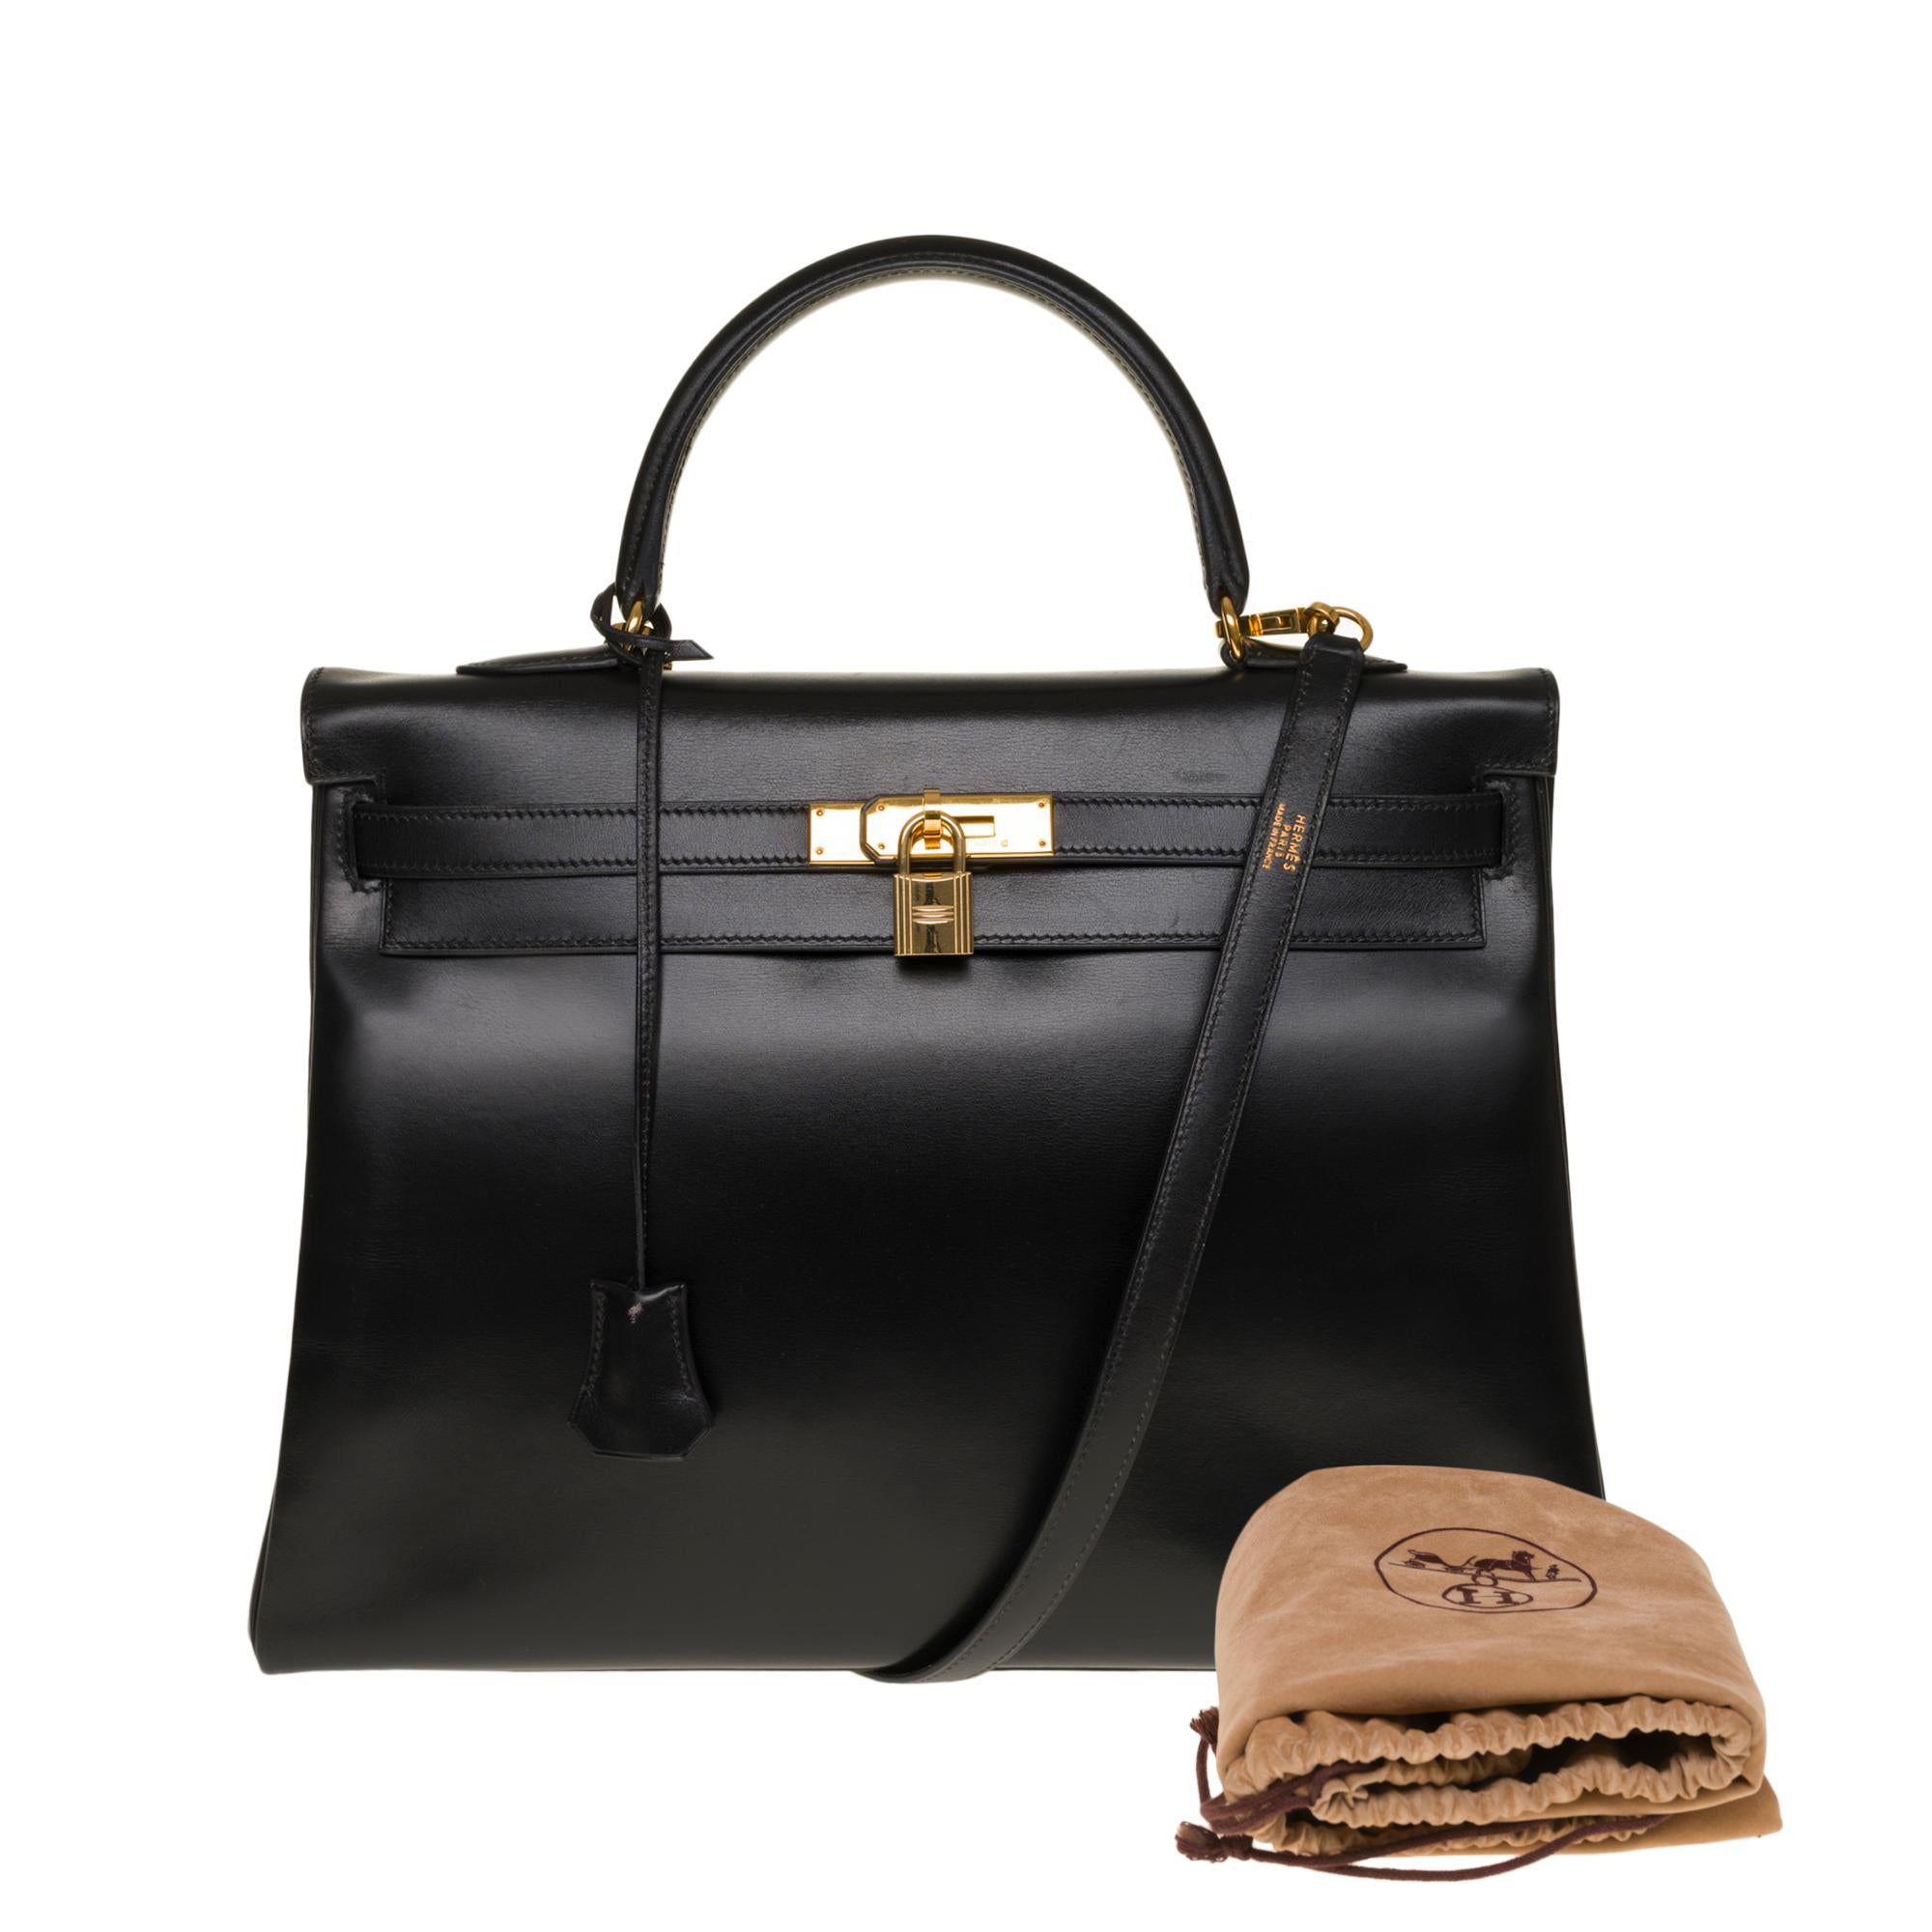 Rare Hermès Kelly 35 retourné handbag with strap in Black Calf leather, GHW 4